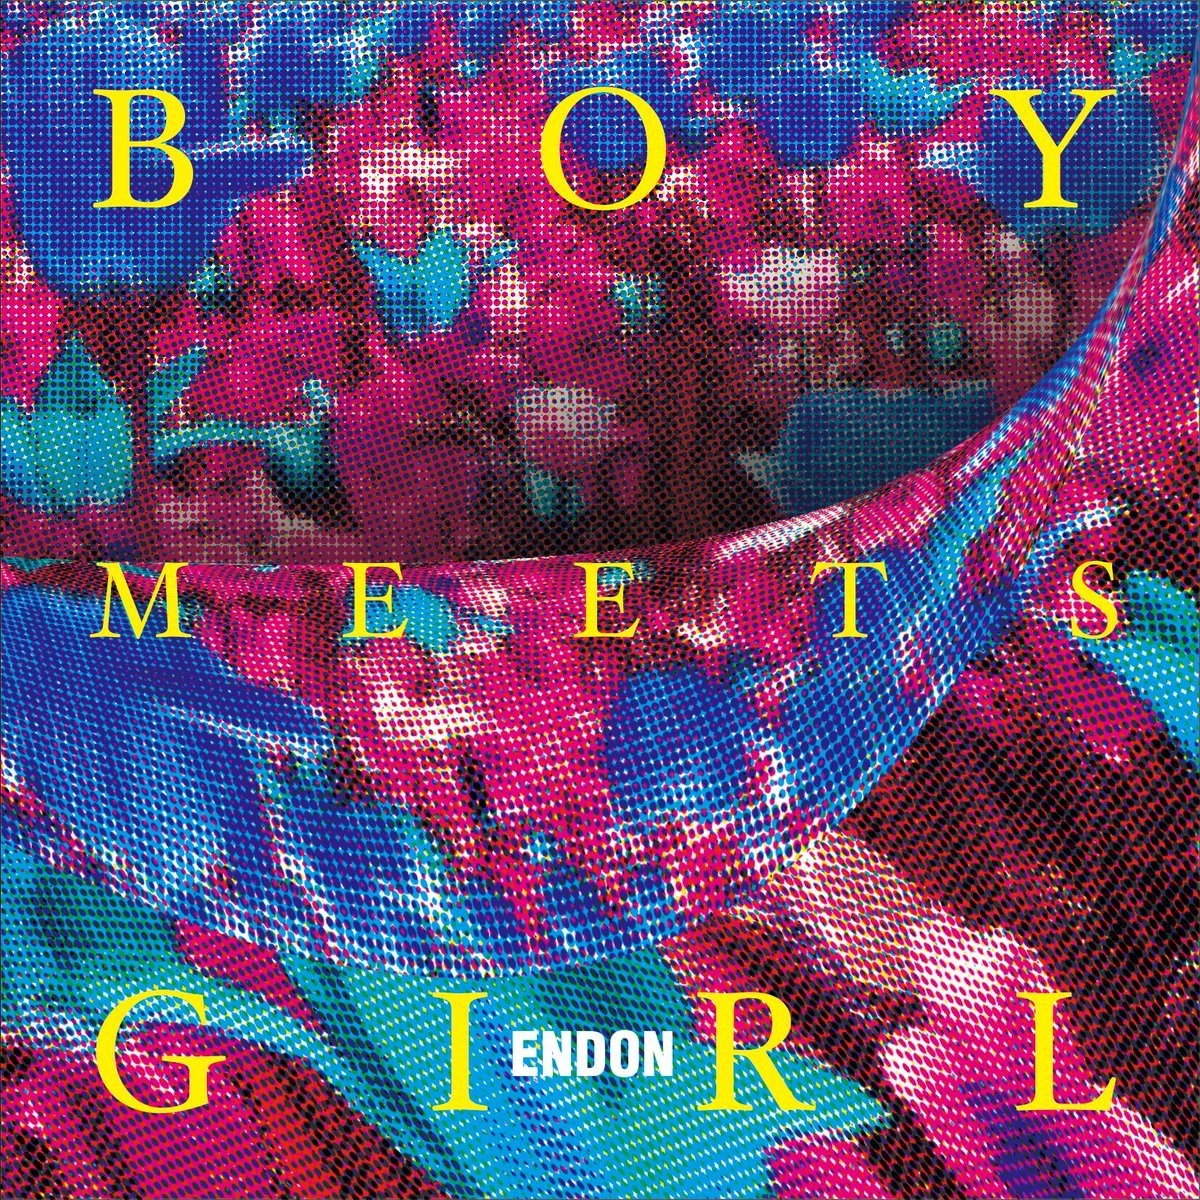 Endon – Boy Meets Girl [FLAC + MP3 320 / CD] [2018.09.05]